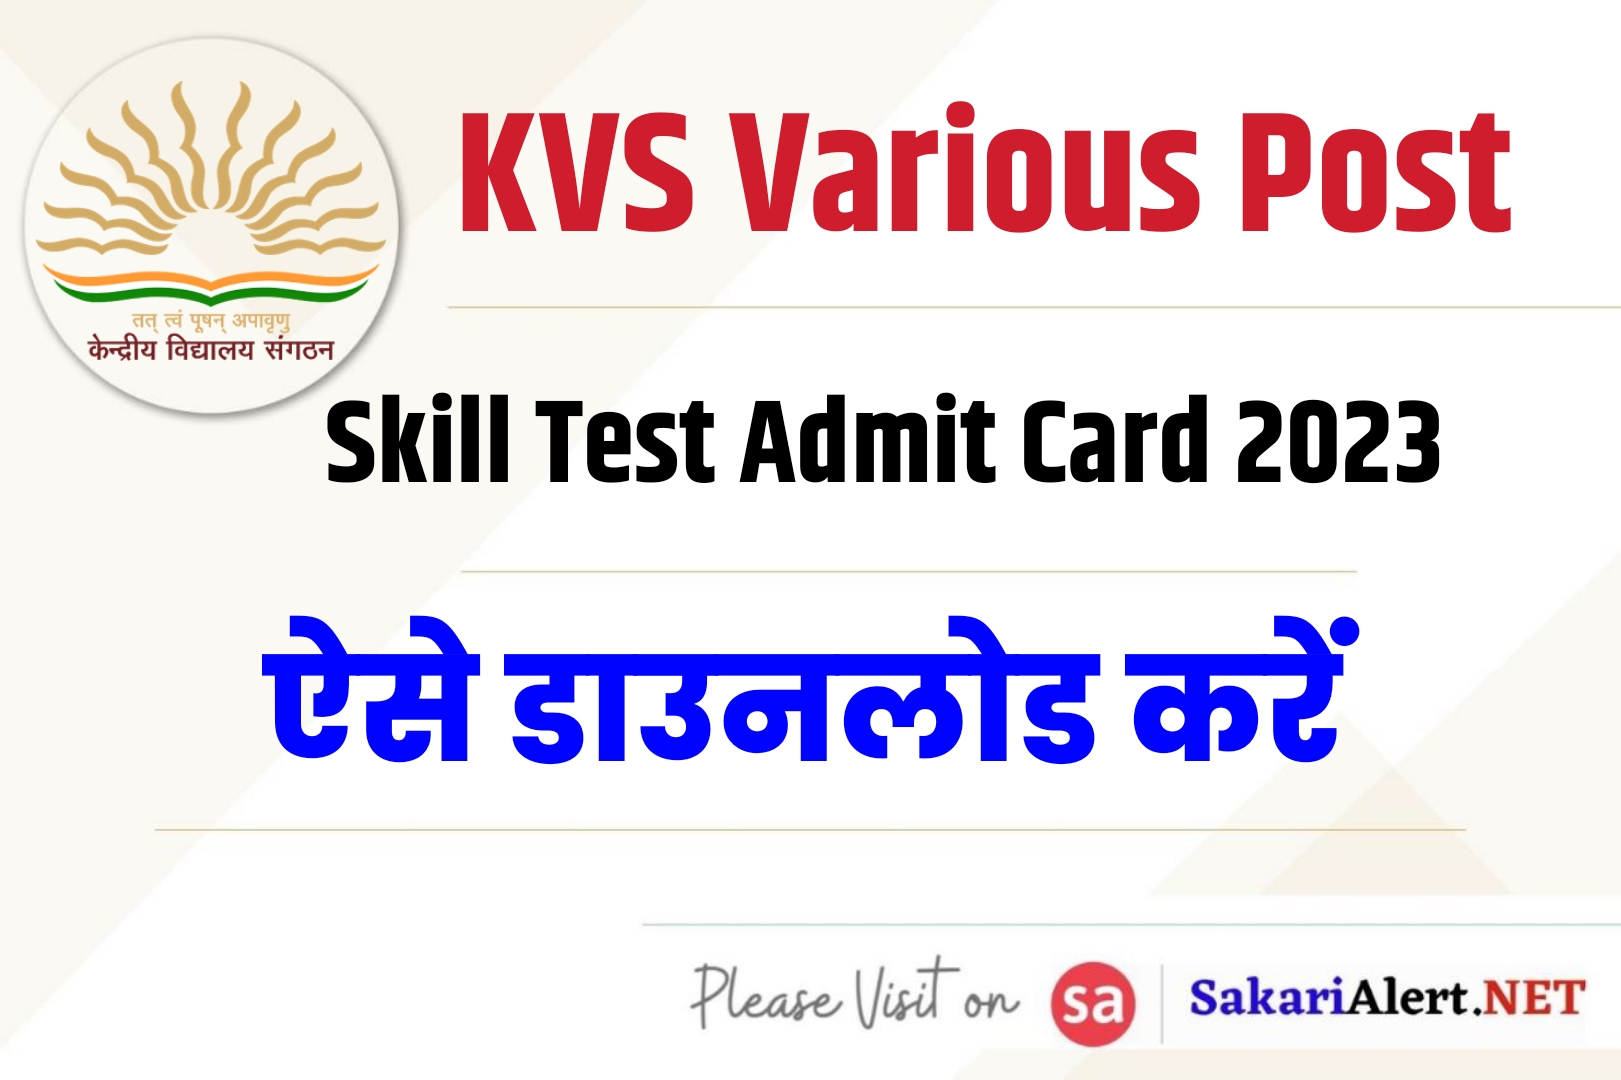 KVS Various Post Skill Test Admit Card 2023